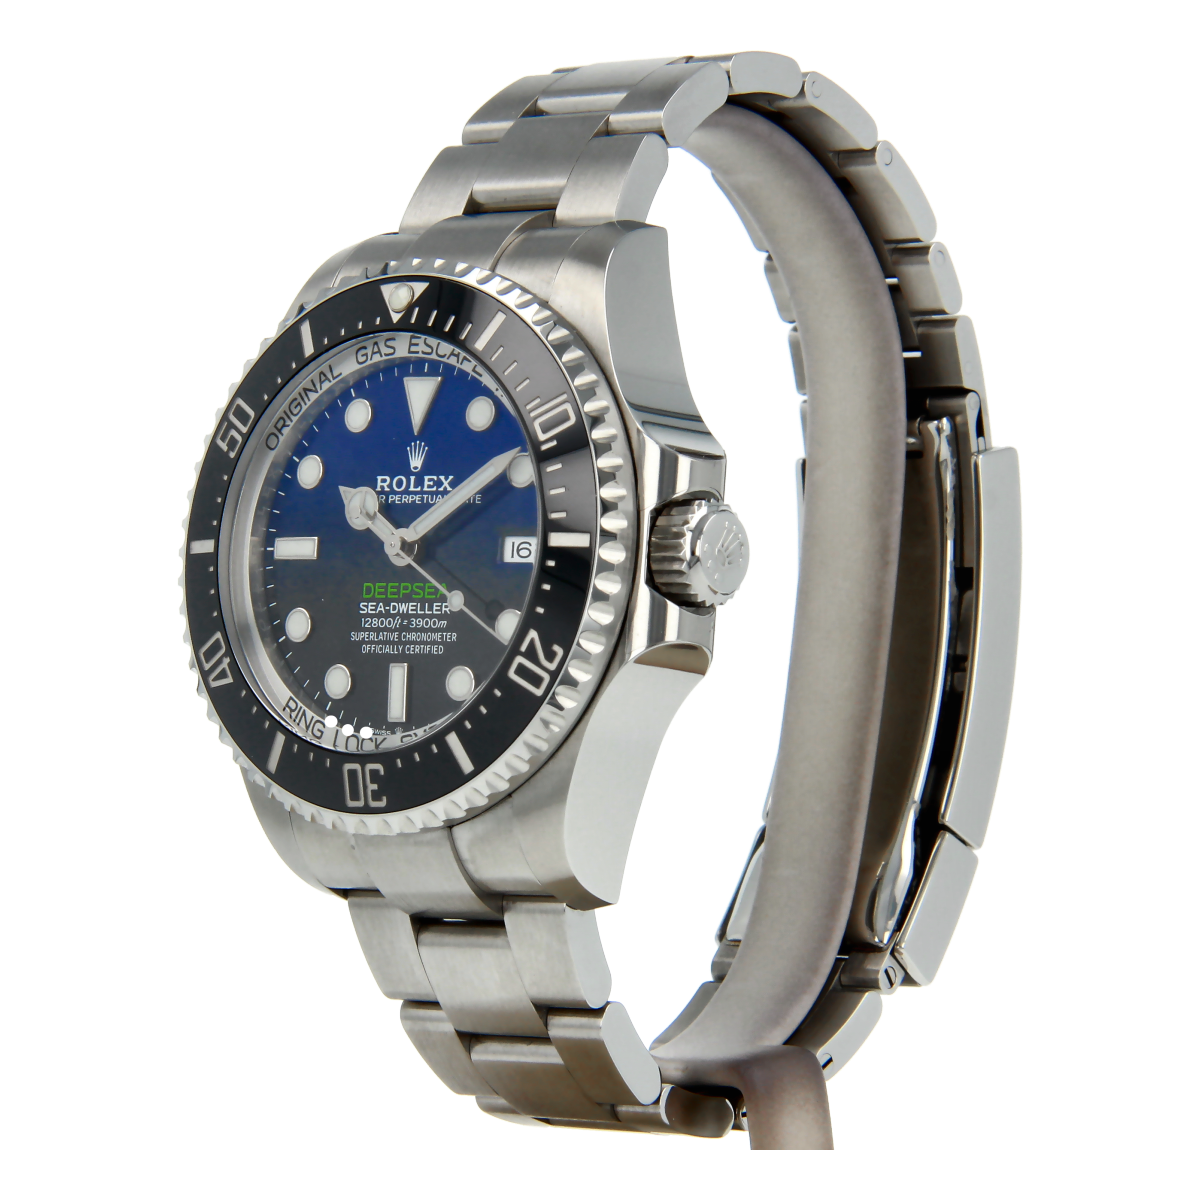 Rolex Sea-Dweller Deepsea 126660 